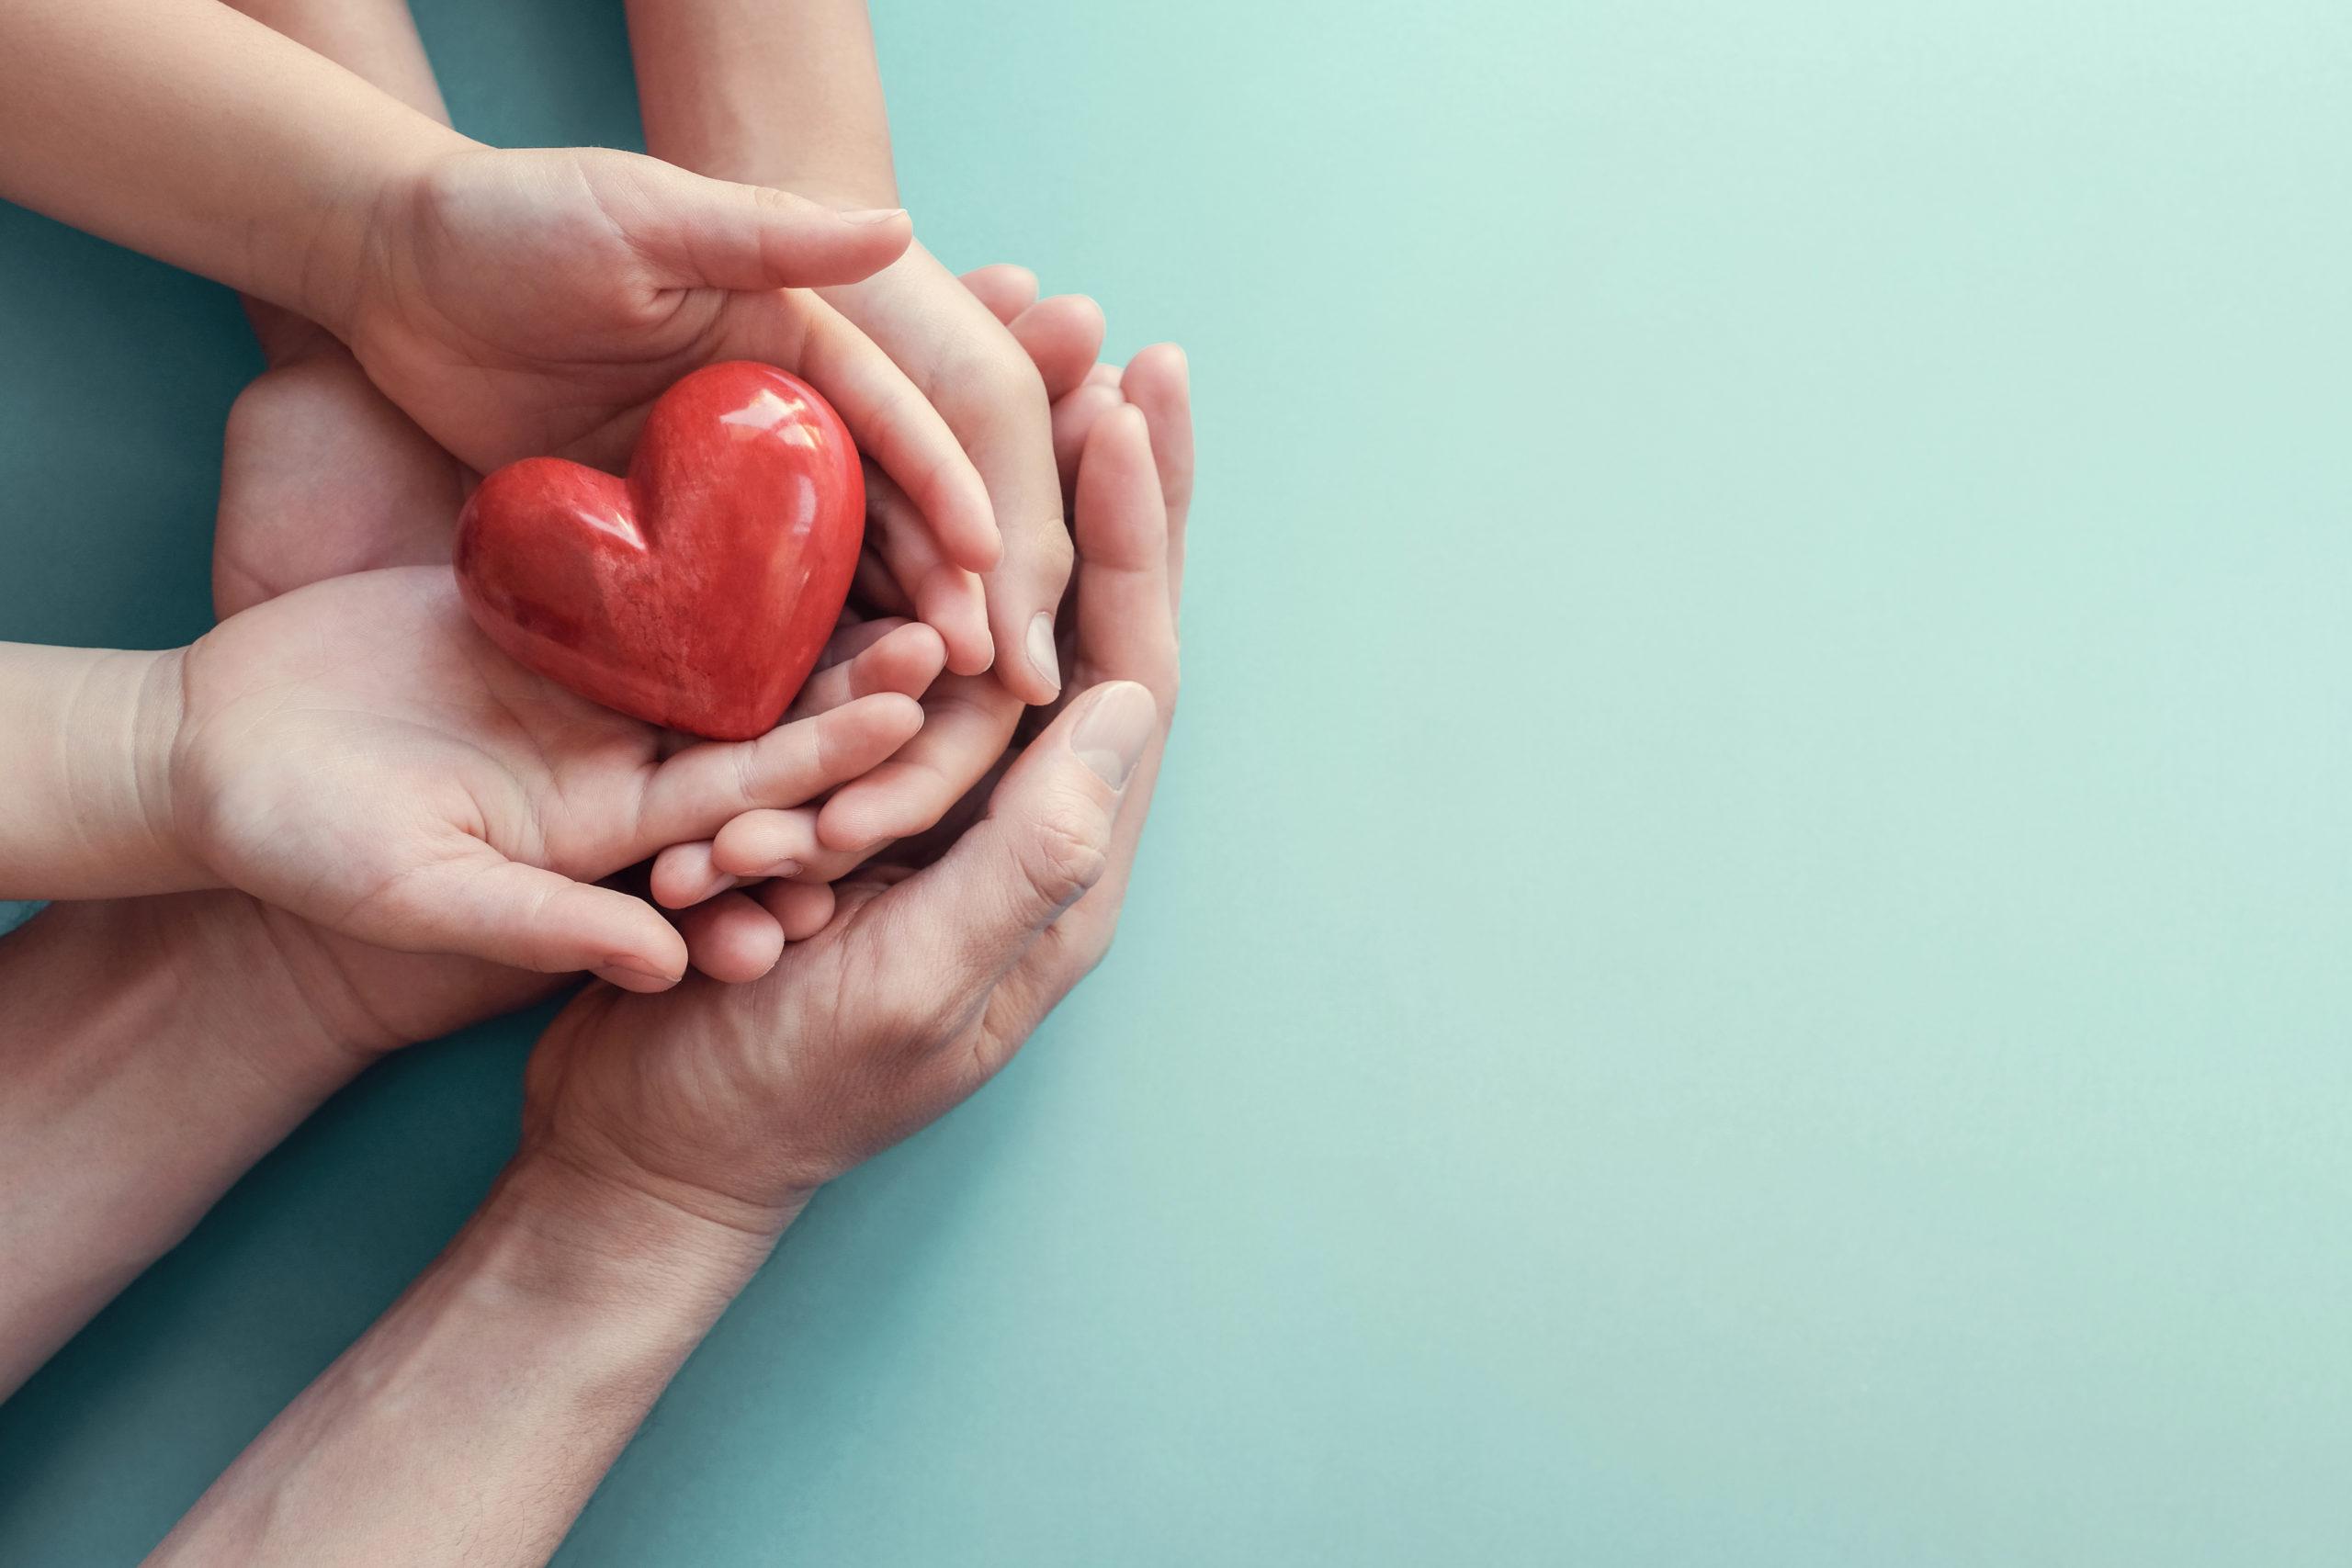 adult and child hands holding red heart on aqua background, heart health, 捐赠, 企业社会责任概念, world heart day, world health day, 家庭日